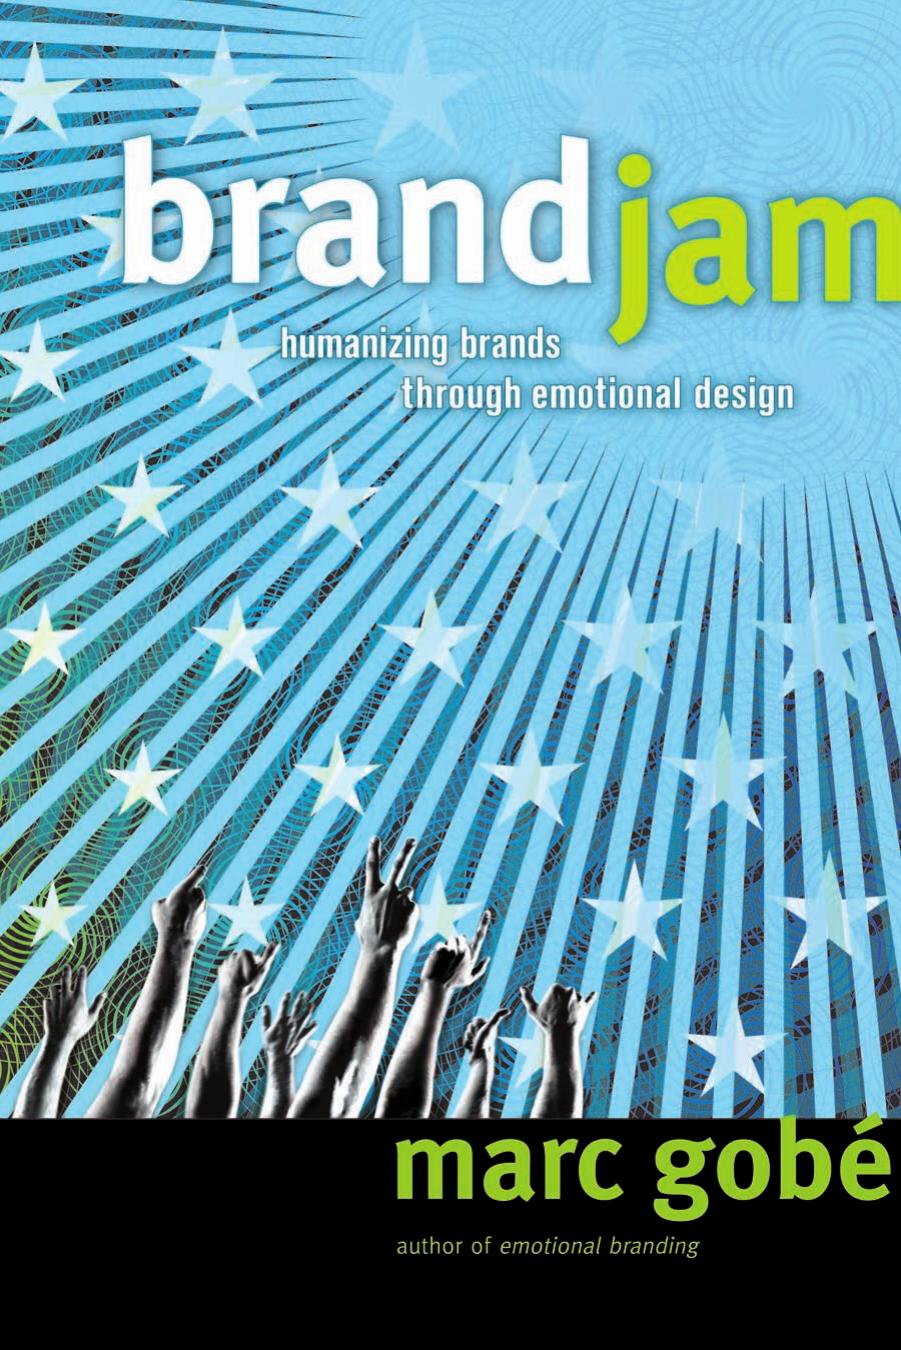 Marc Gobe Brandjam Humanizing Brands Through Emotional Design. 2007